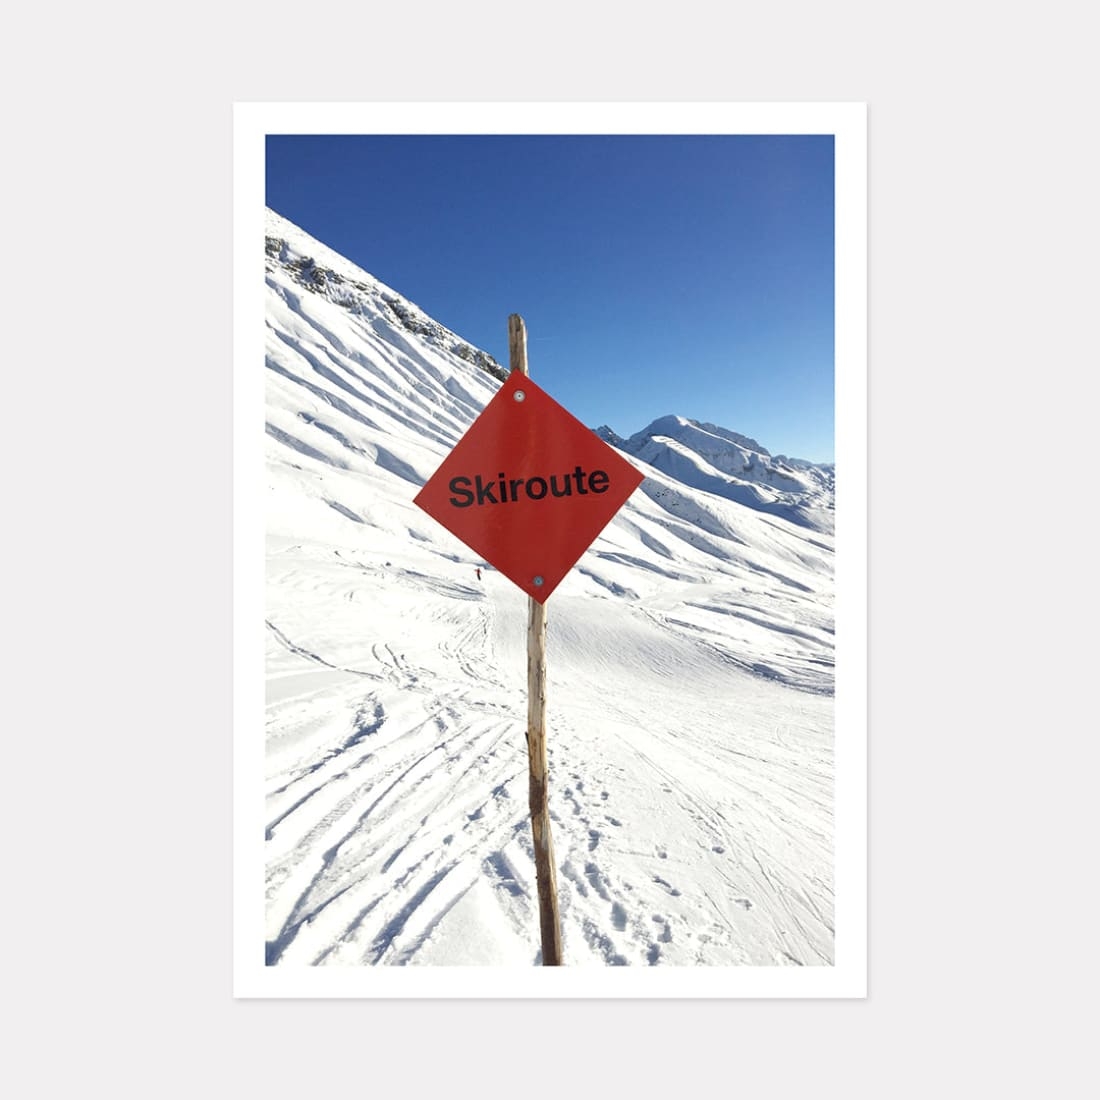 Ski Route Mountain Art Print, A2 (59.4cm x 42cm) unframed print – Powderhound